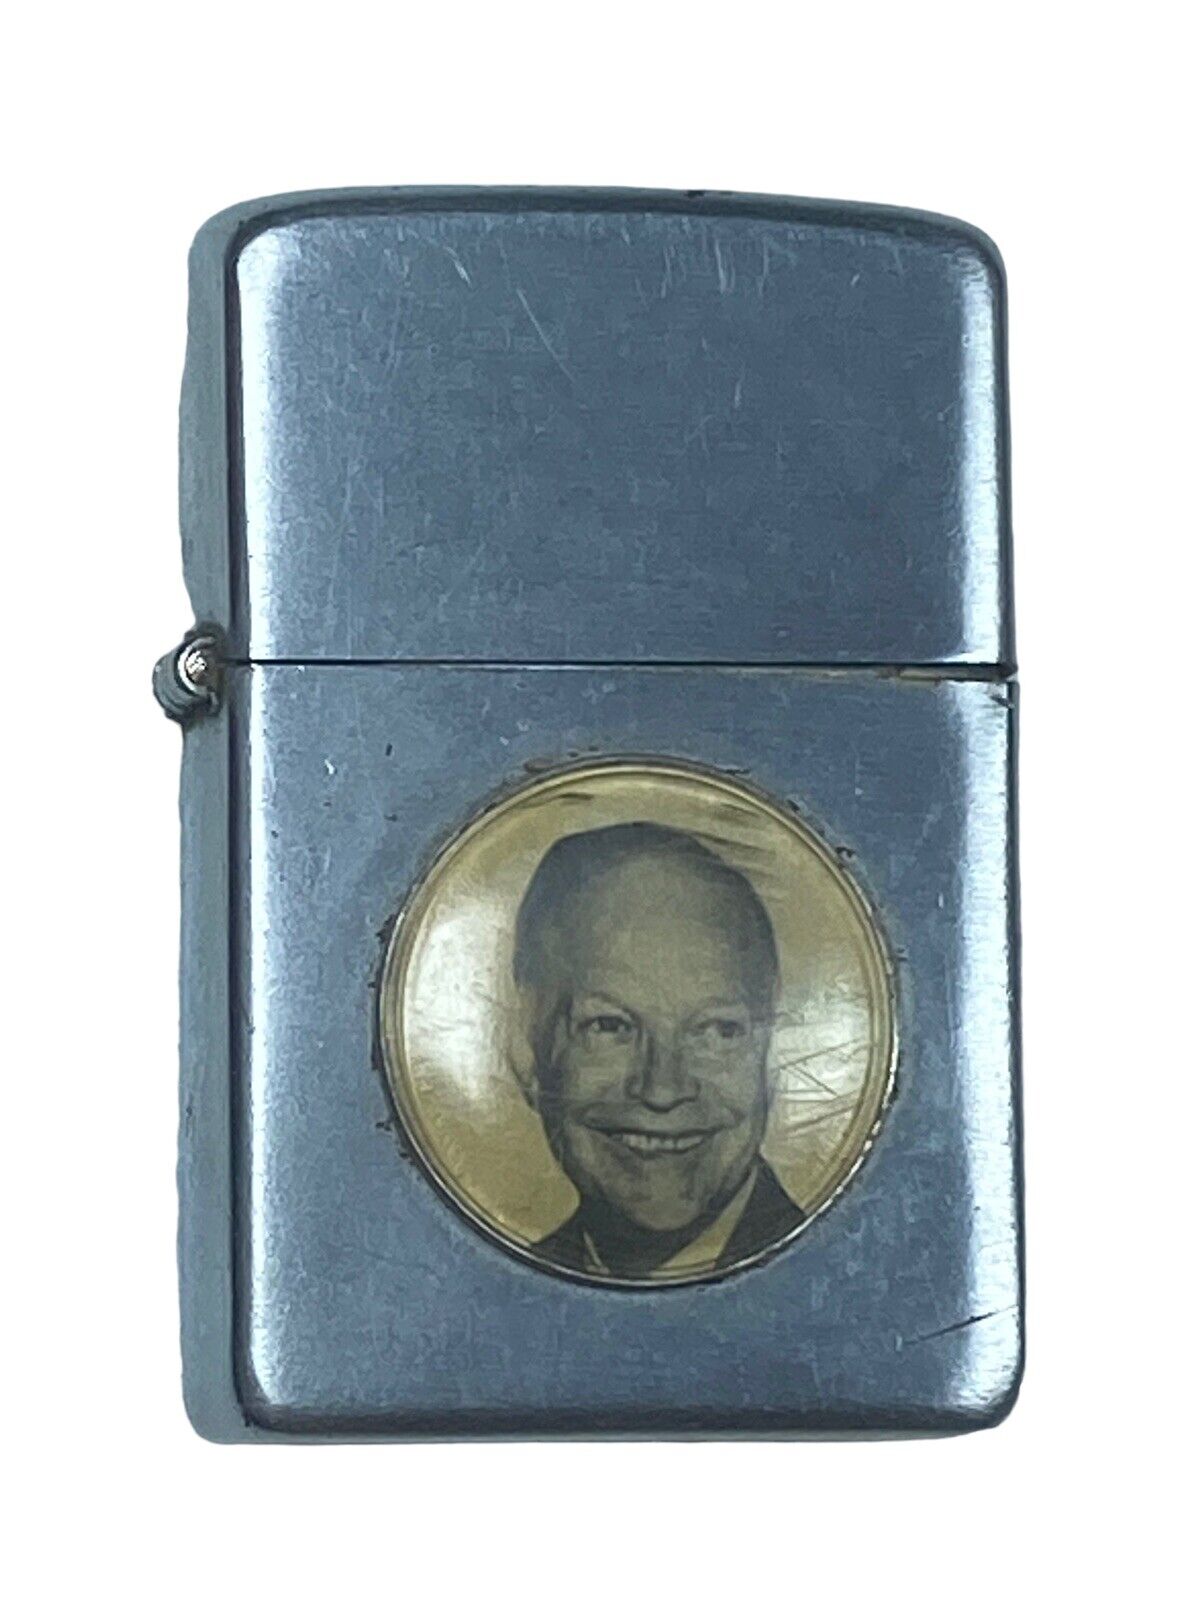 Zippo Lighter 1937-1950 PAT 2032695 Dwight d Eisenhower campaign picture vtg